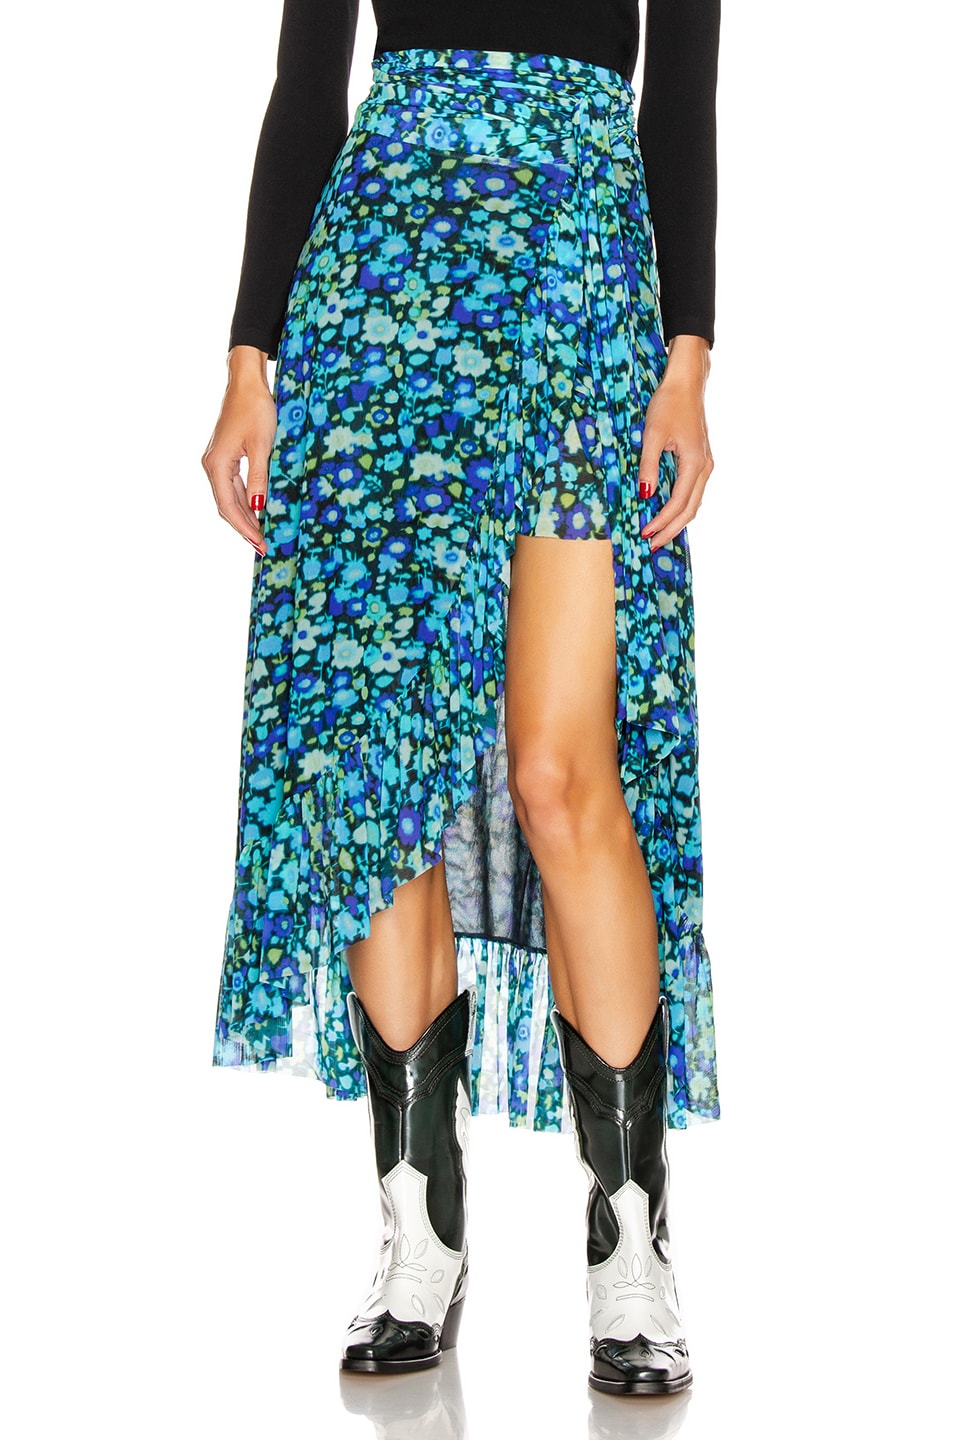 Ganni Printed Mesh Skirt in Azure Blue | FWRD